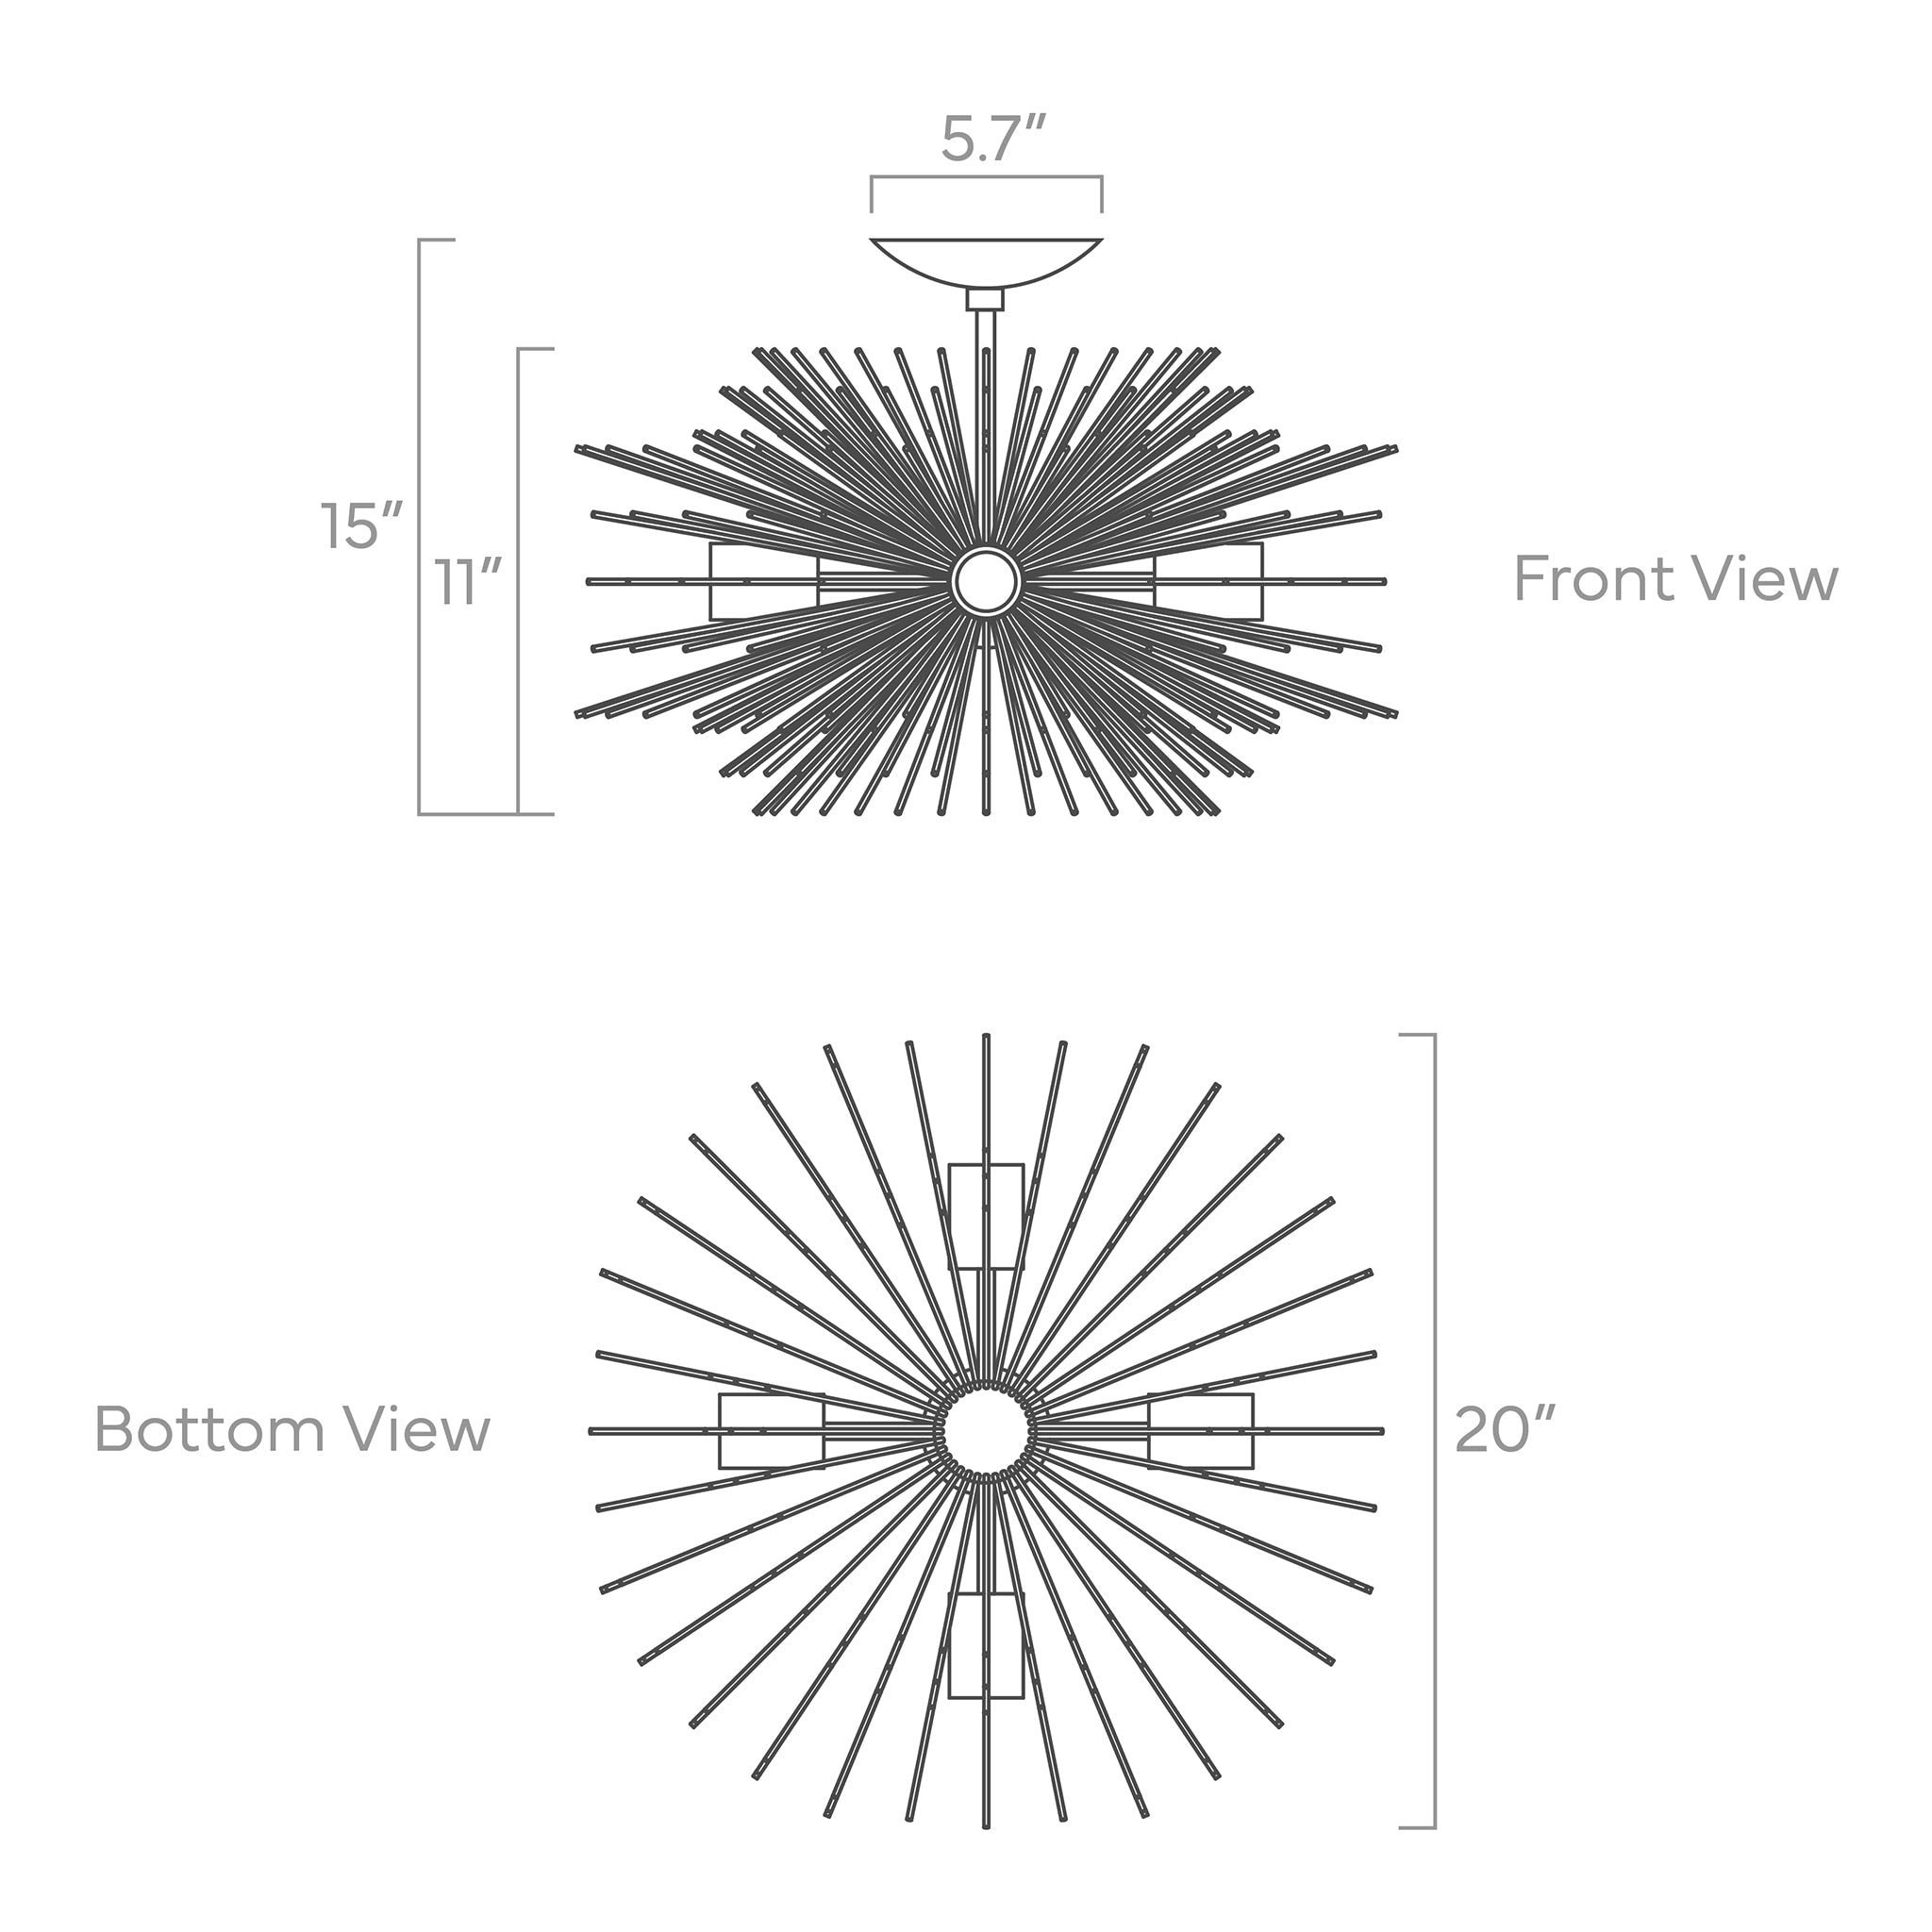 ISO drawing Urchin flush mount 20" Dutton Brown lighting